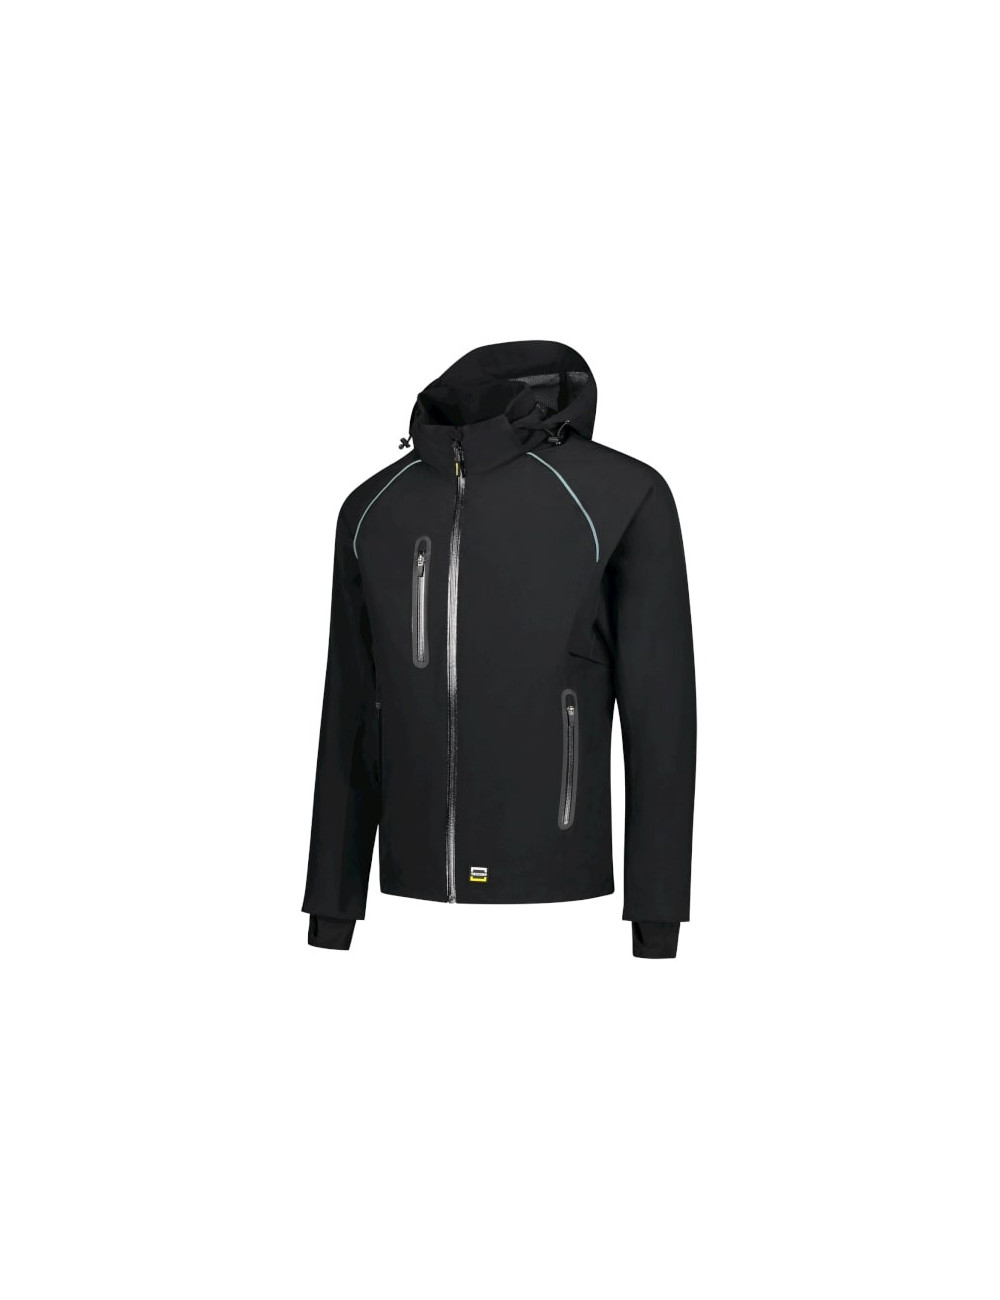 Tech shell t54 unisex jacket black Adler Tricorp